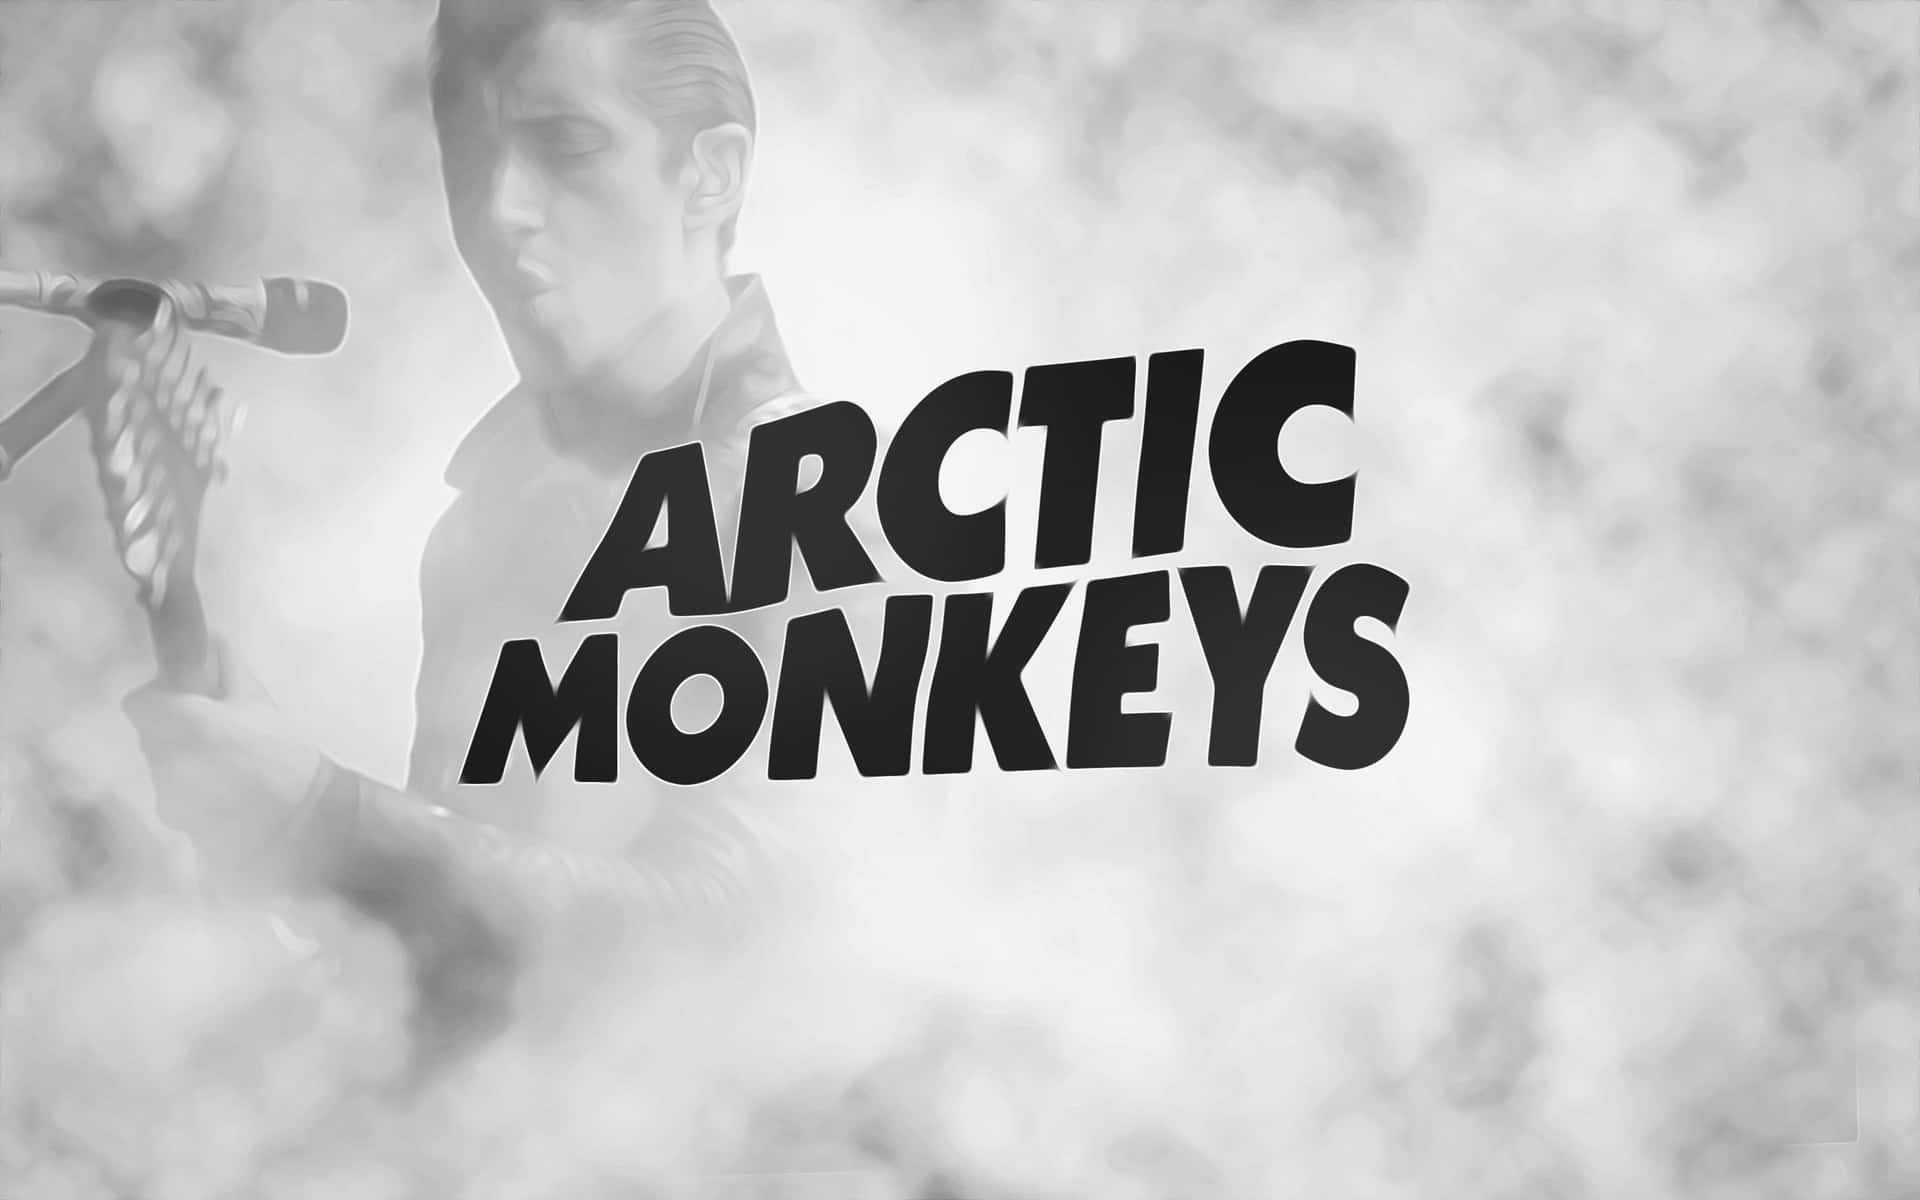 Arctic Monkeys Live Performance